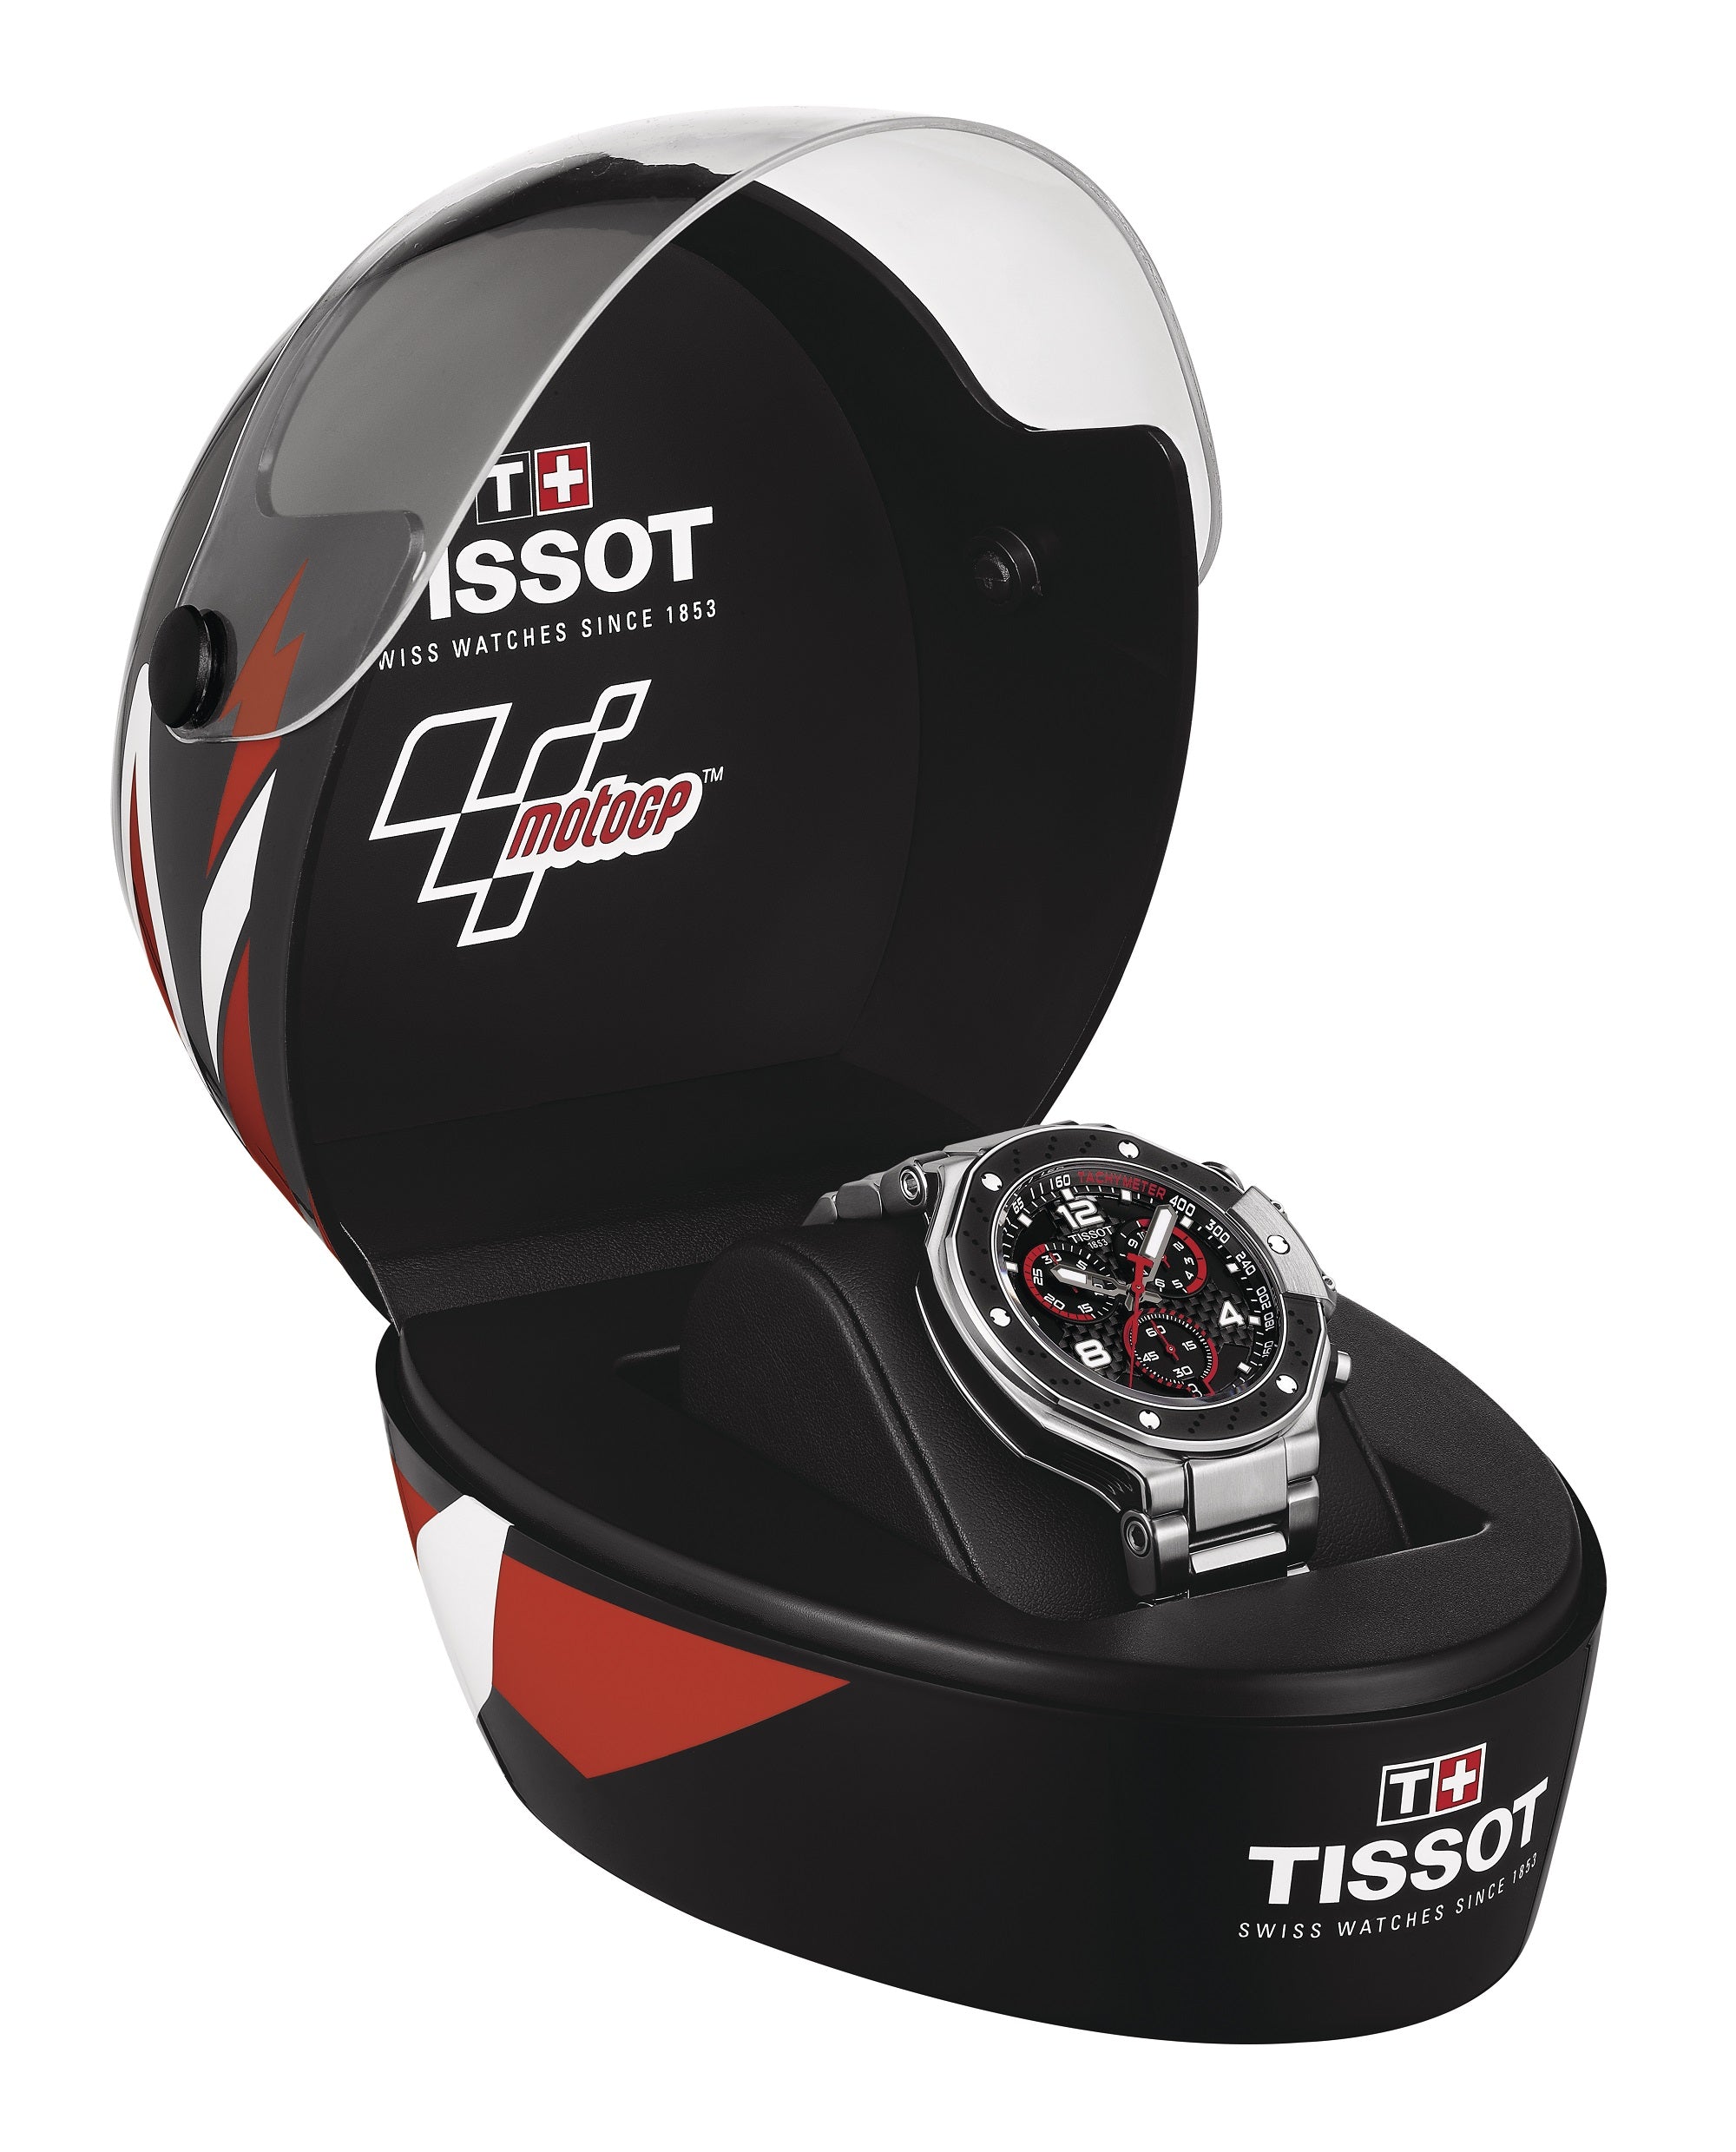 RELOJ TISSOT HOMBRE T-RACE MOTO GP22 T141.417.11.057.00 – Relojes Leroy